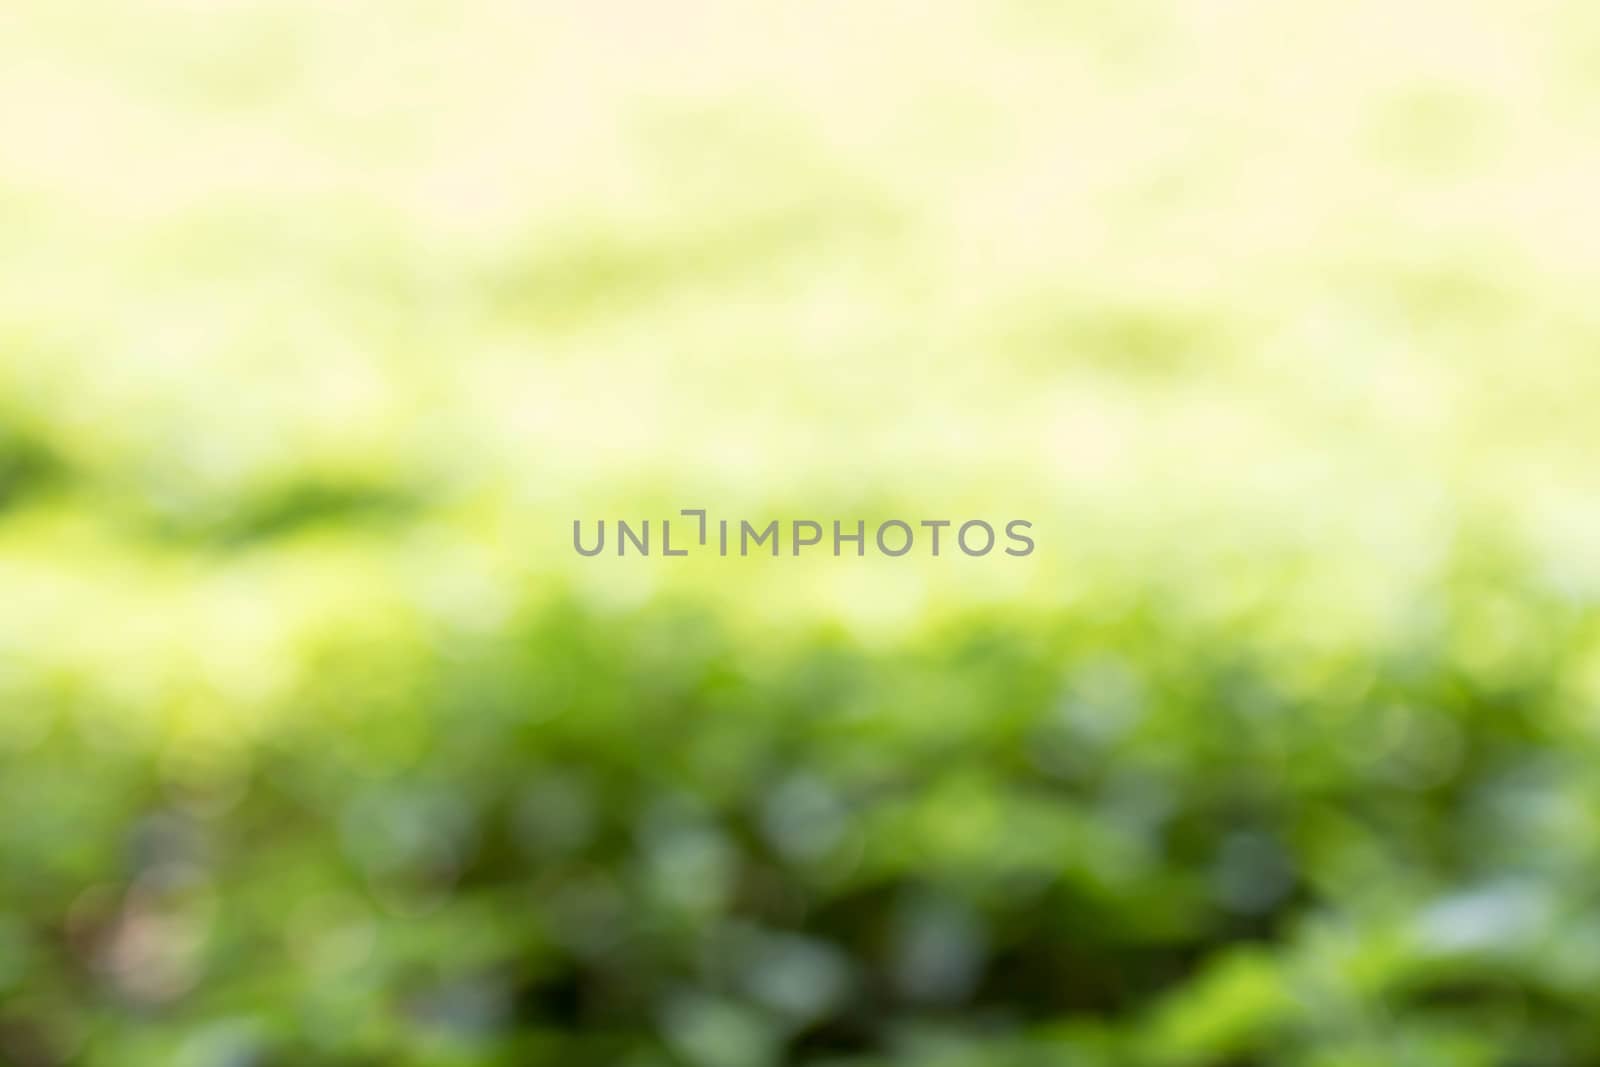 blurred leaf on background